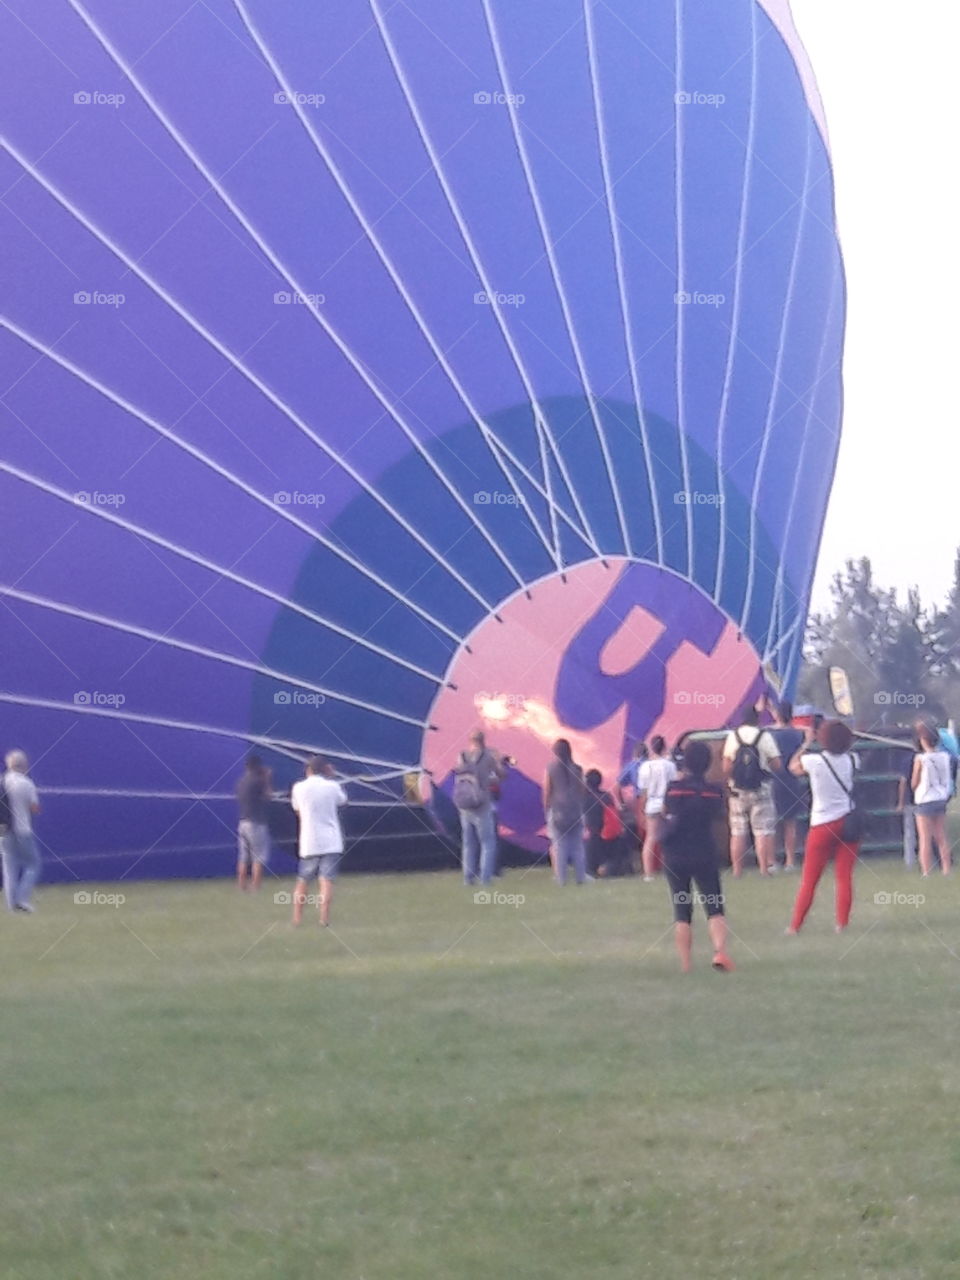 balloon festival Ferrara